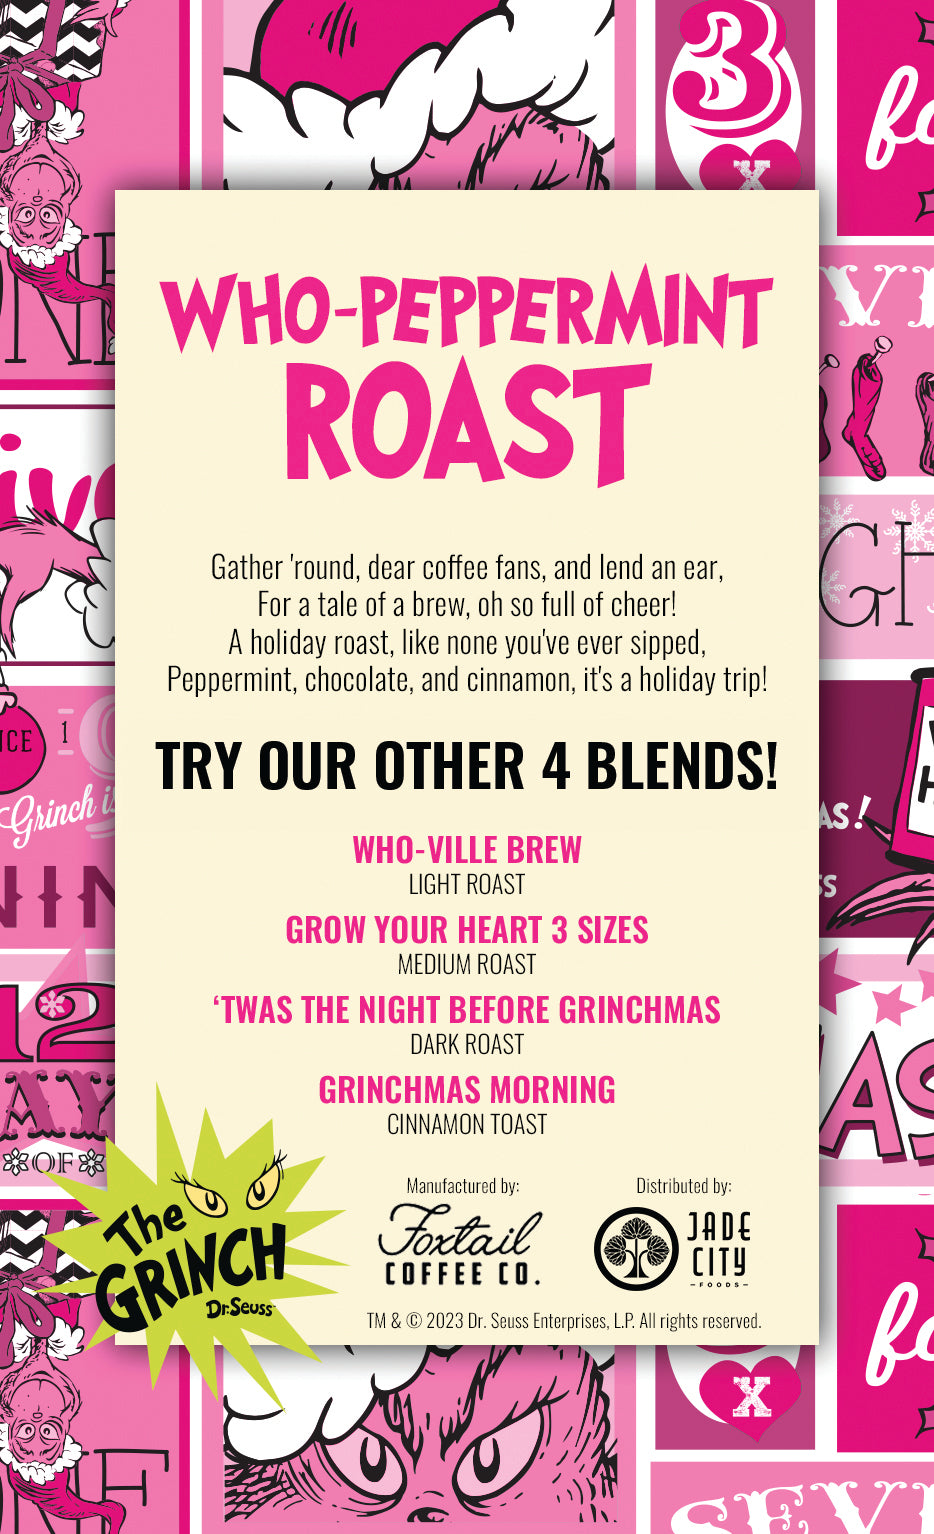 Who-Peppermint Roast : Peppermint Mocha Chip Coffee